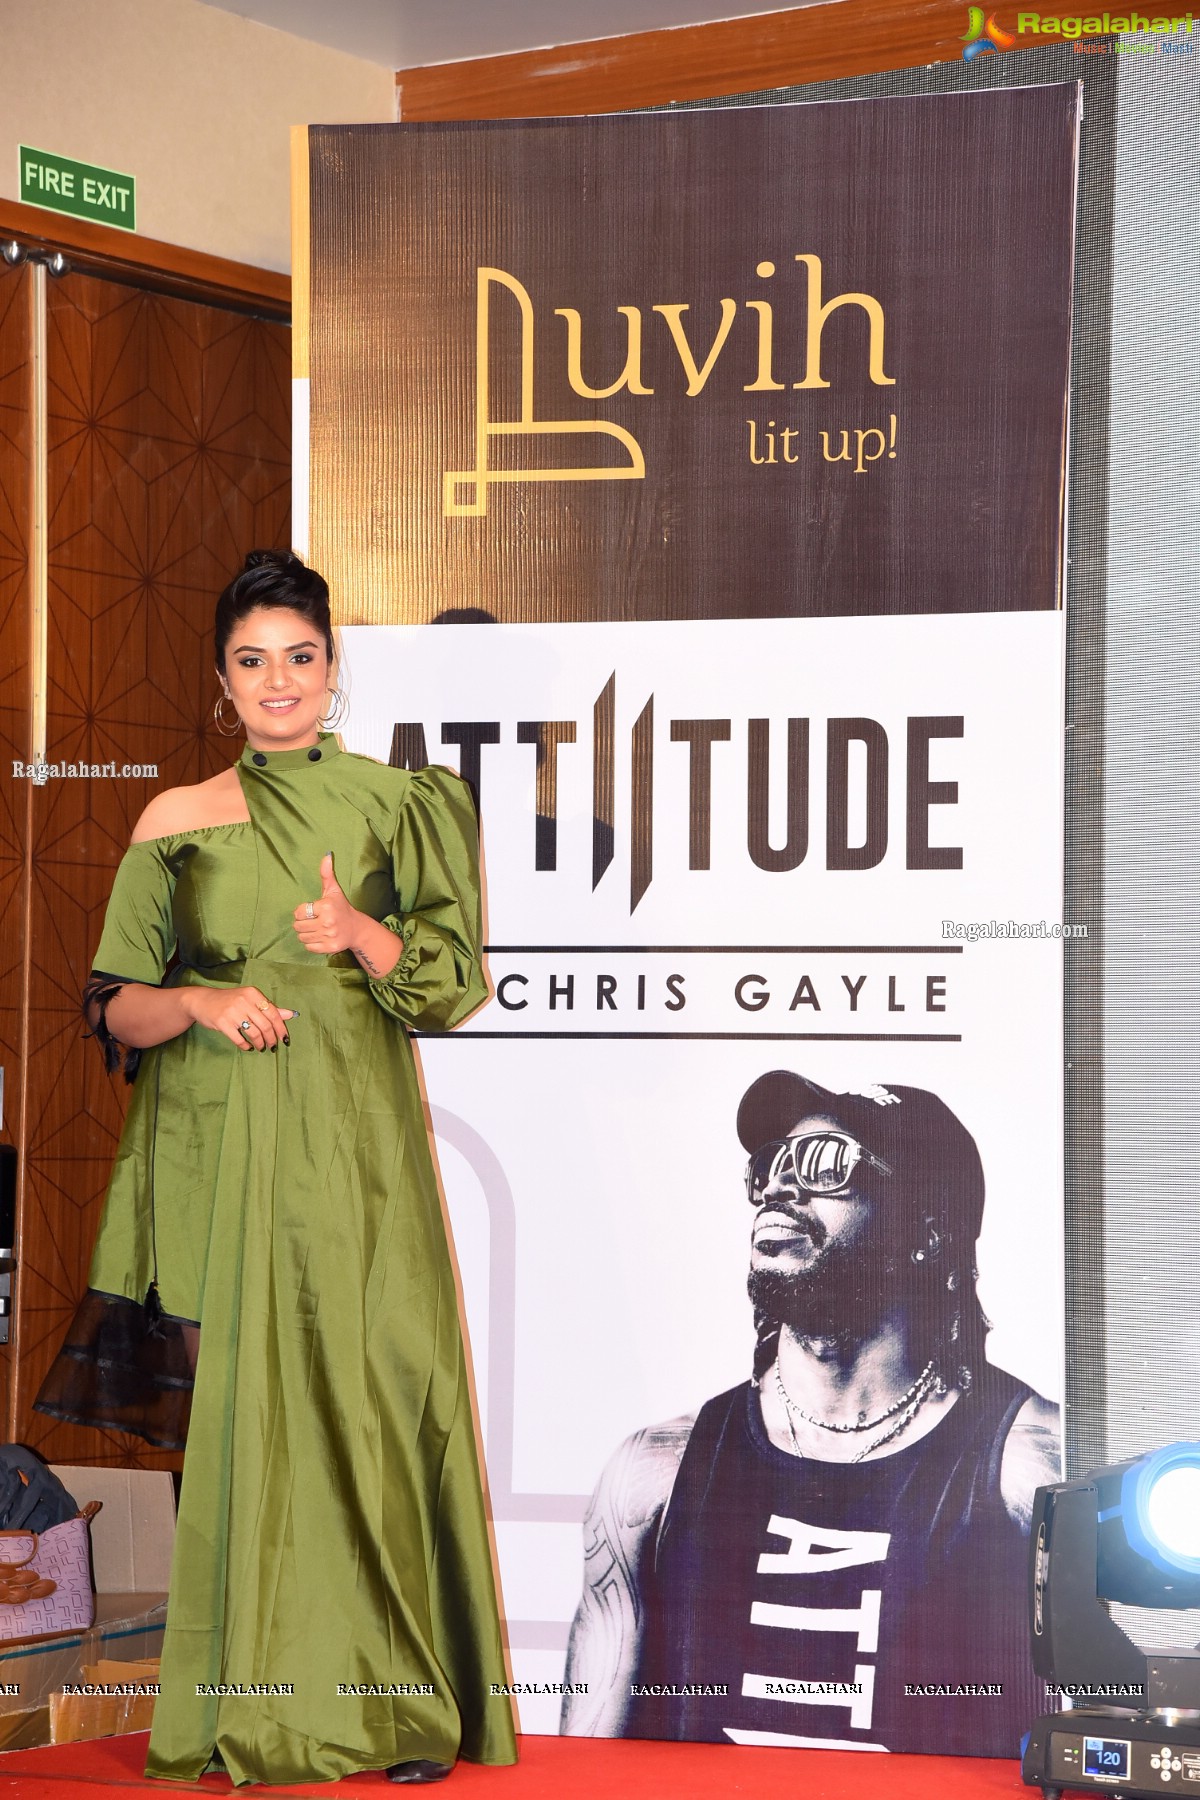 Sreemukhi Becomes Brand Ambassador For Luvih